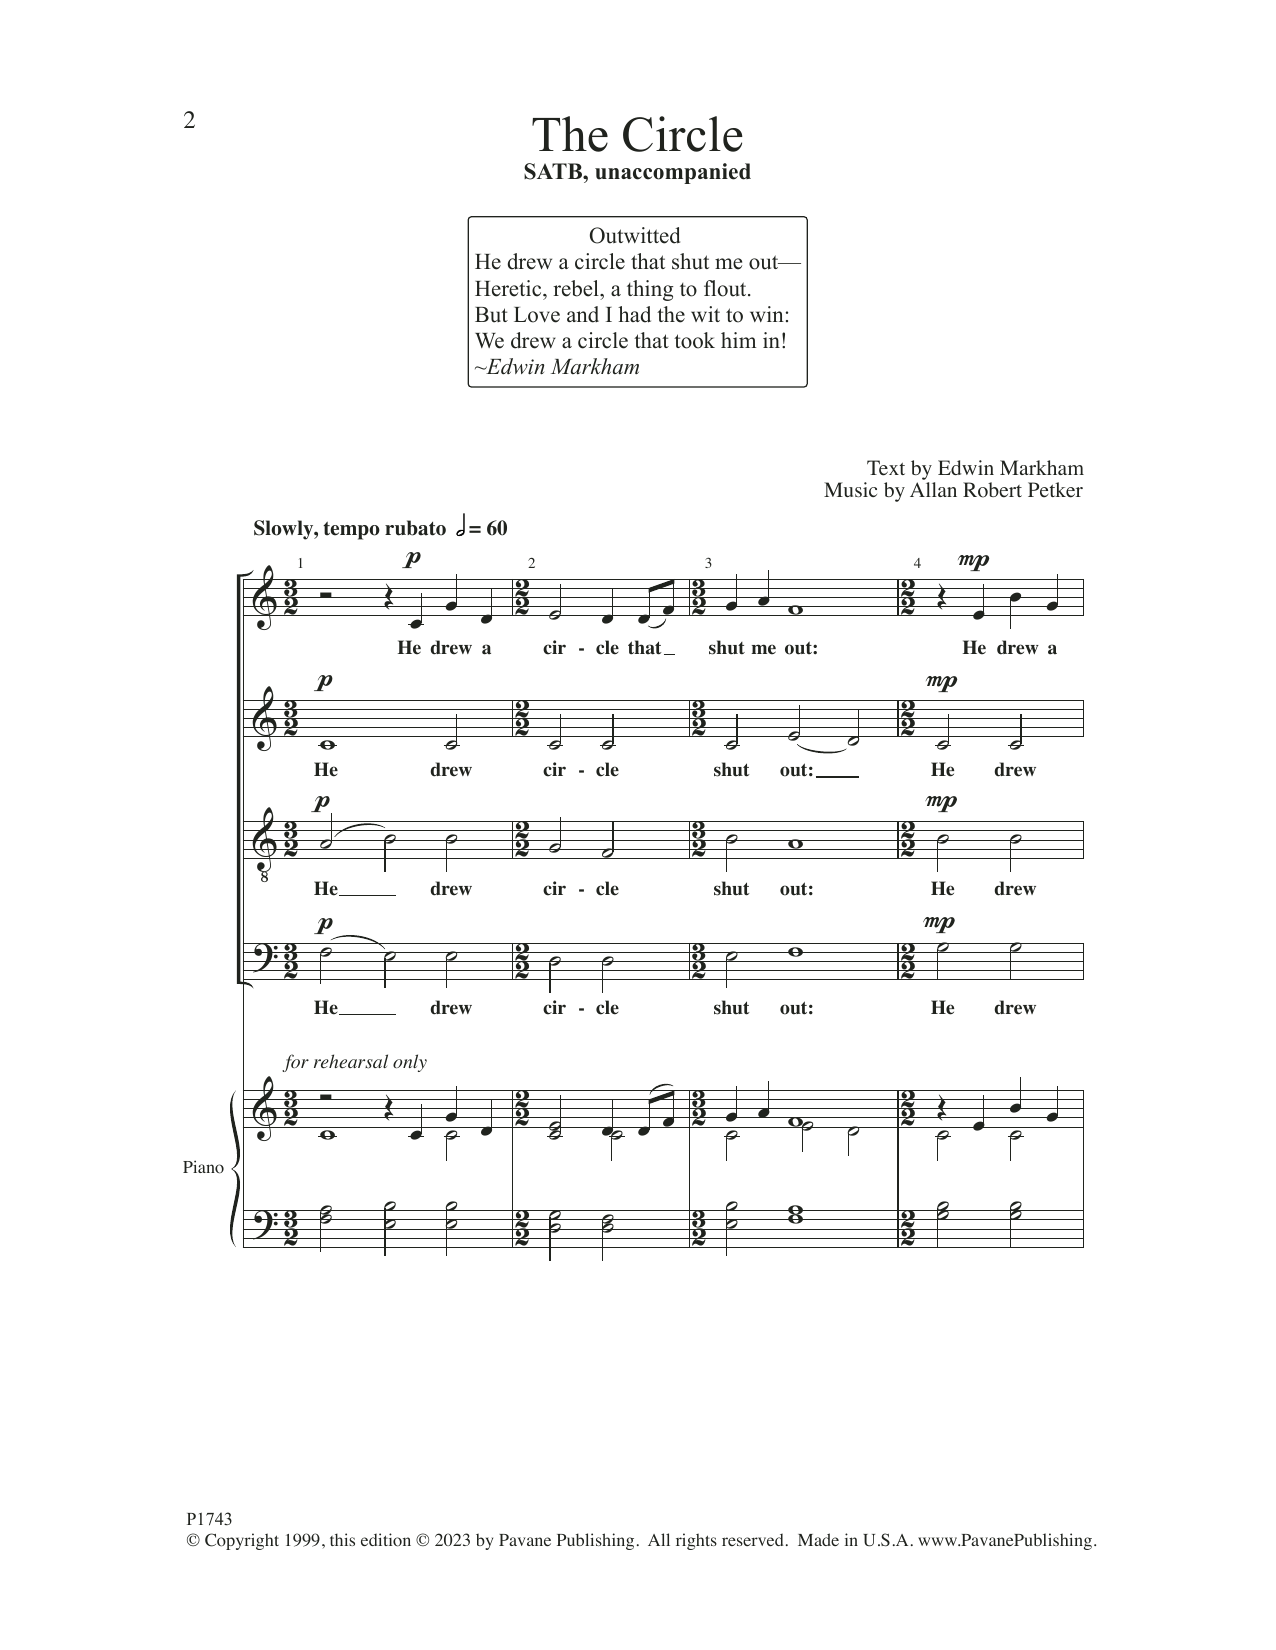 Allan Robert Petker The Circle Sheet Music Notes & Chords for SATB Choir - Download or Print PDF